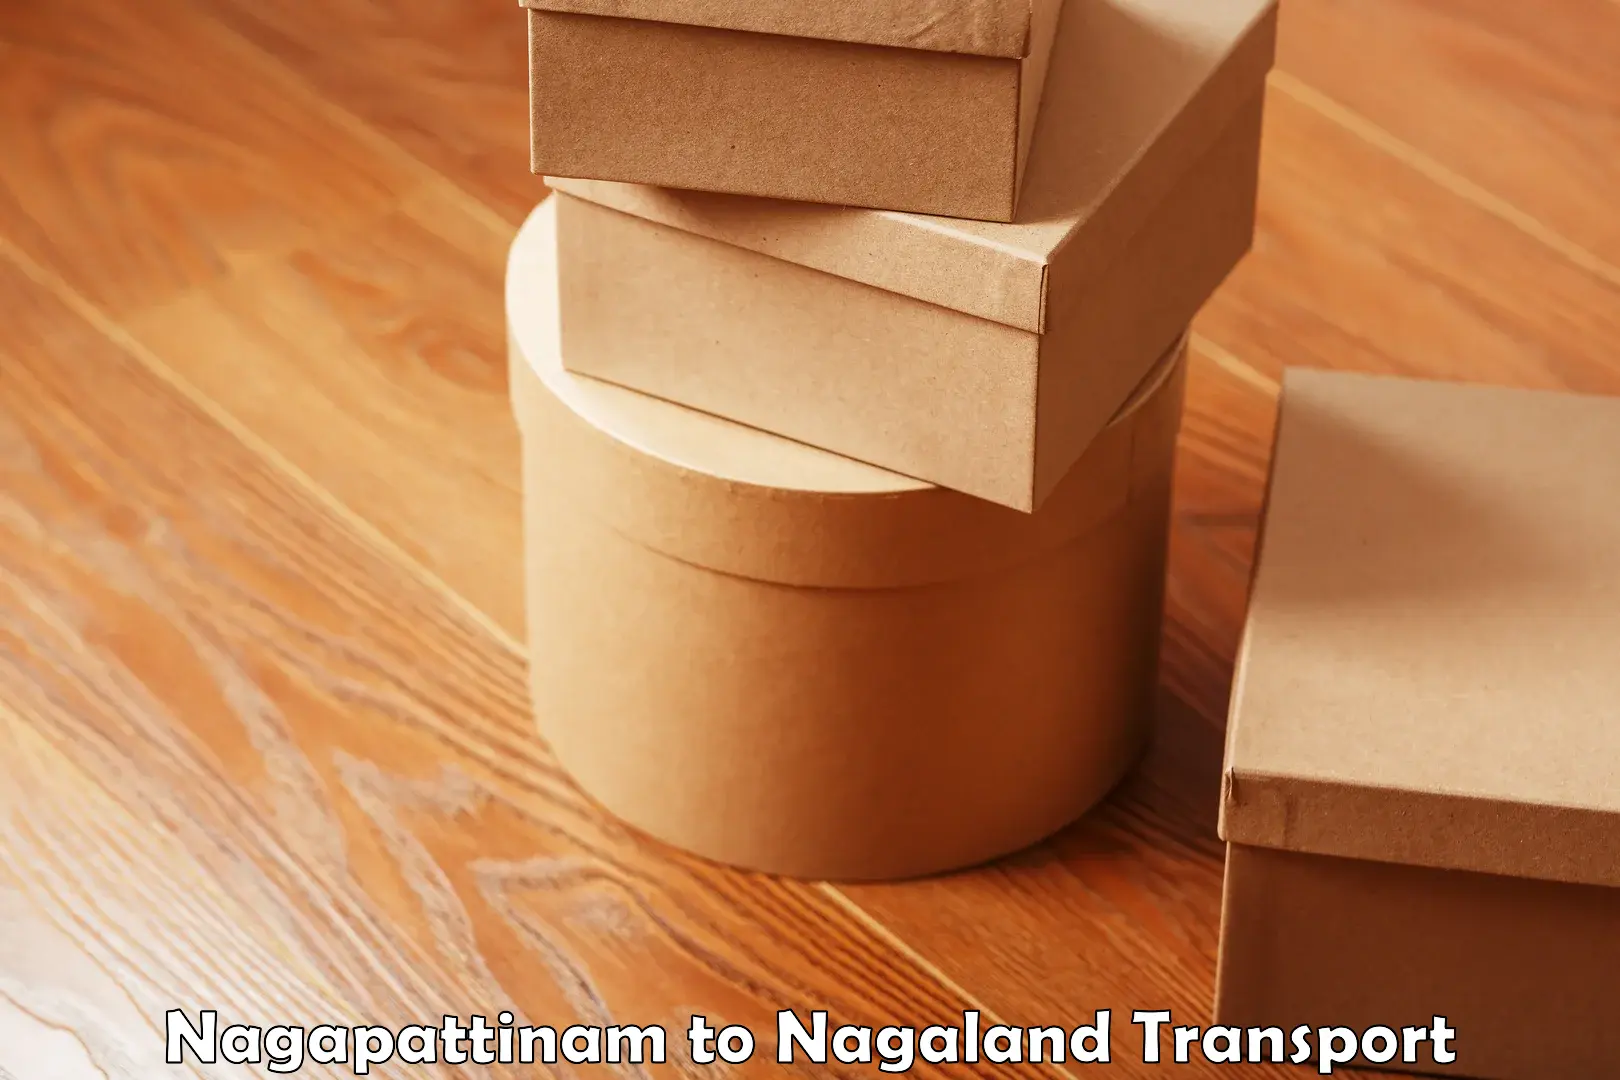 Part load transport service in India Nagapattinam to Dimapur